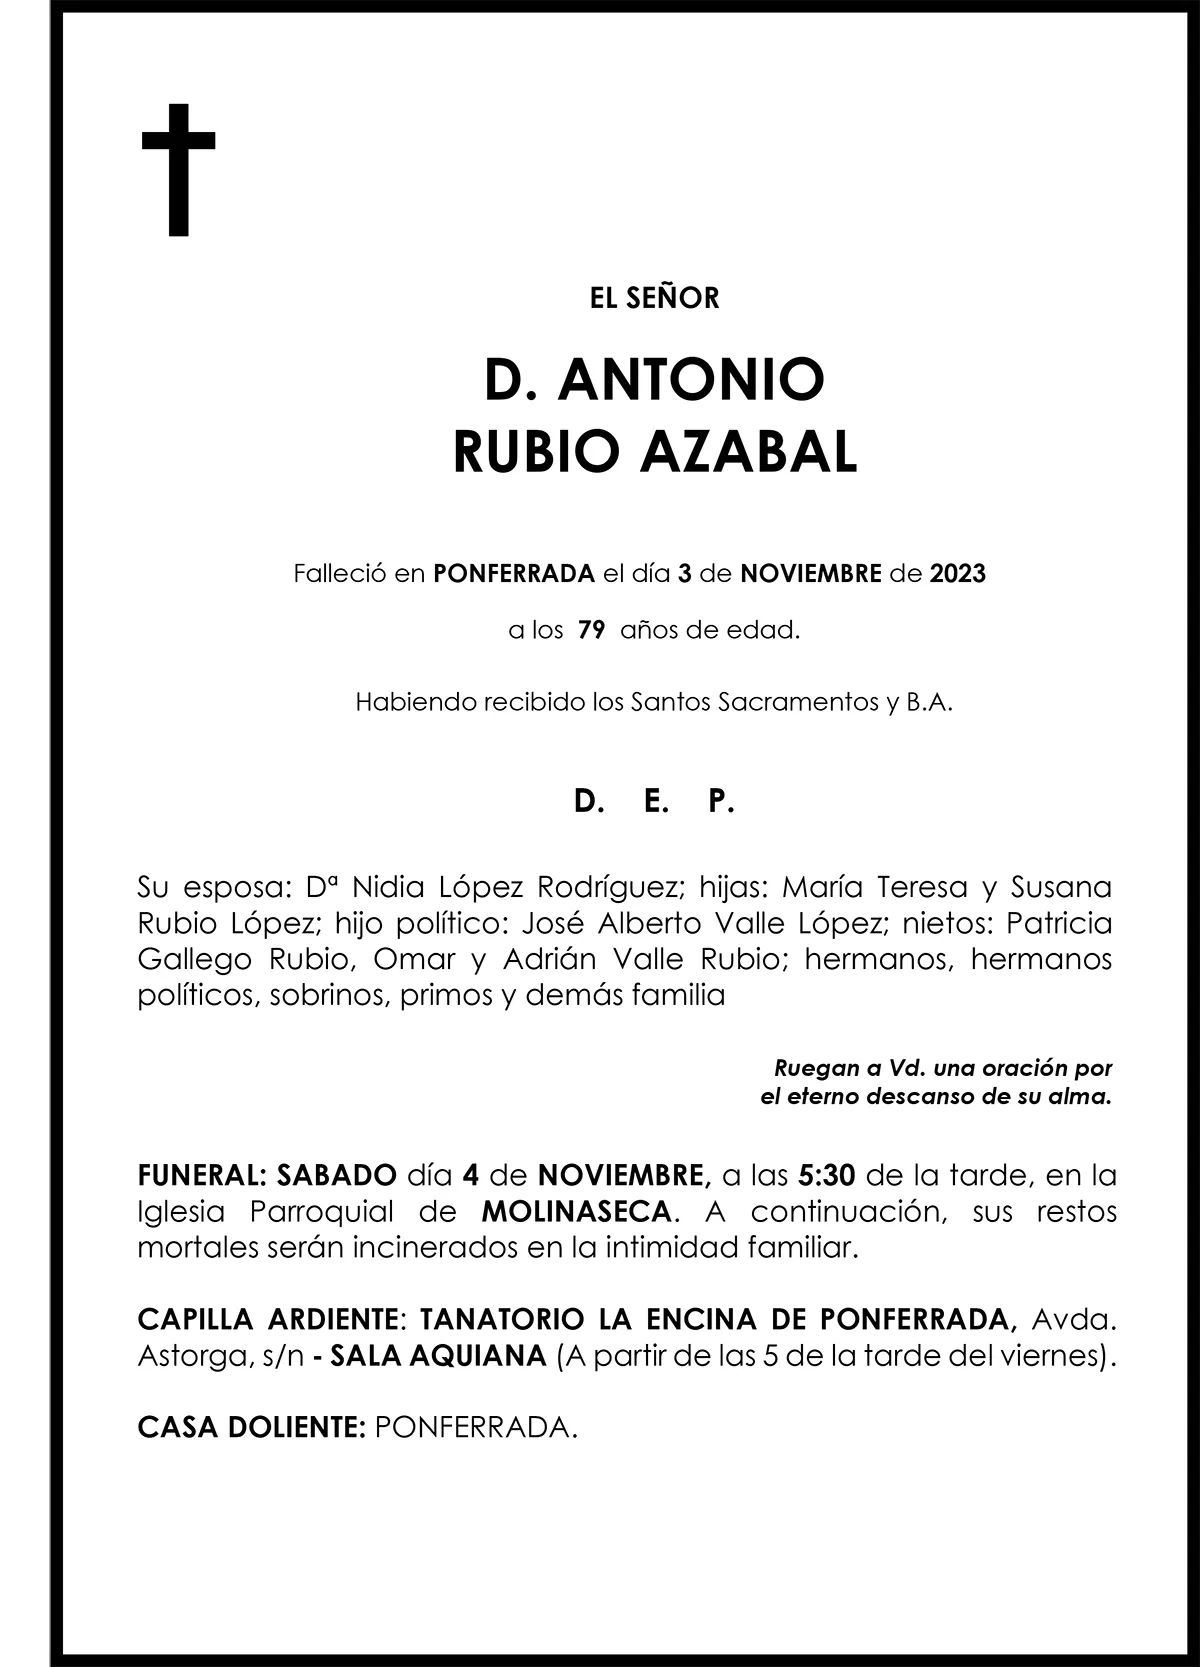 ANTONIO RUBIO AZABAL